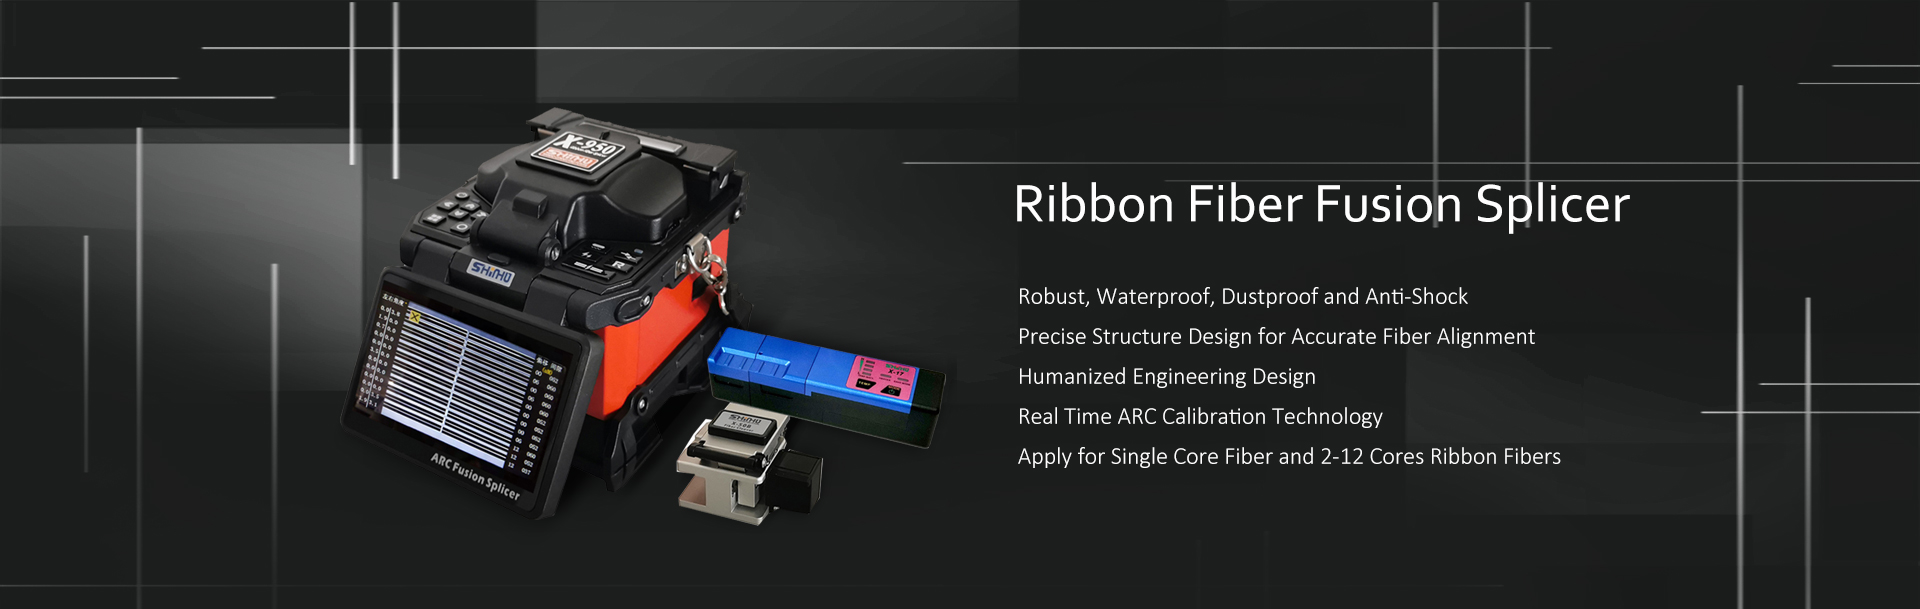 X-950 ribbon fiber fusion splicer